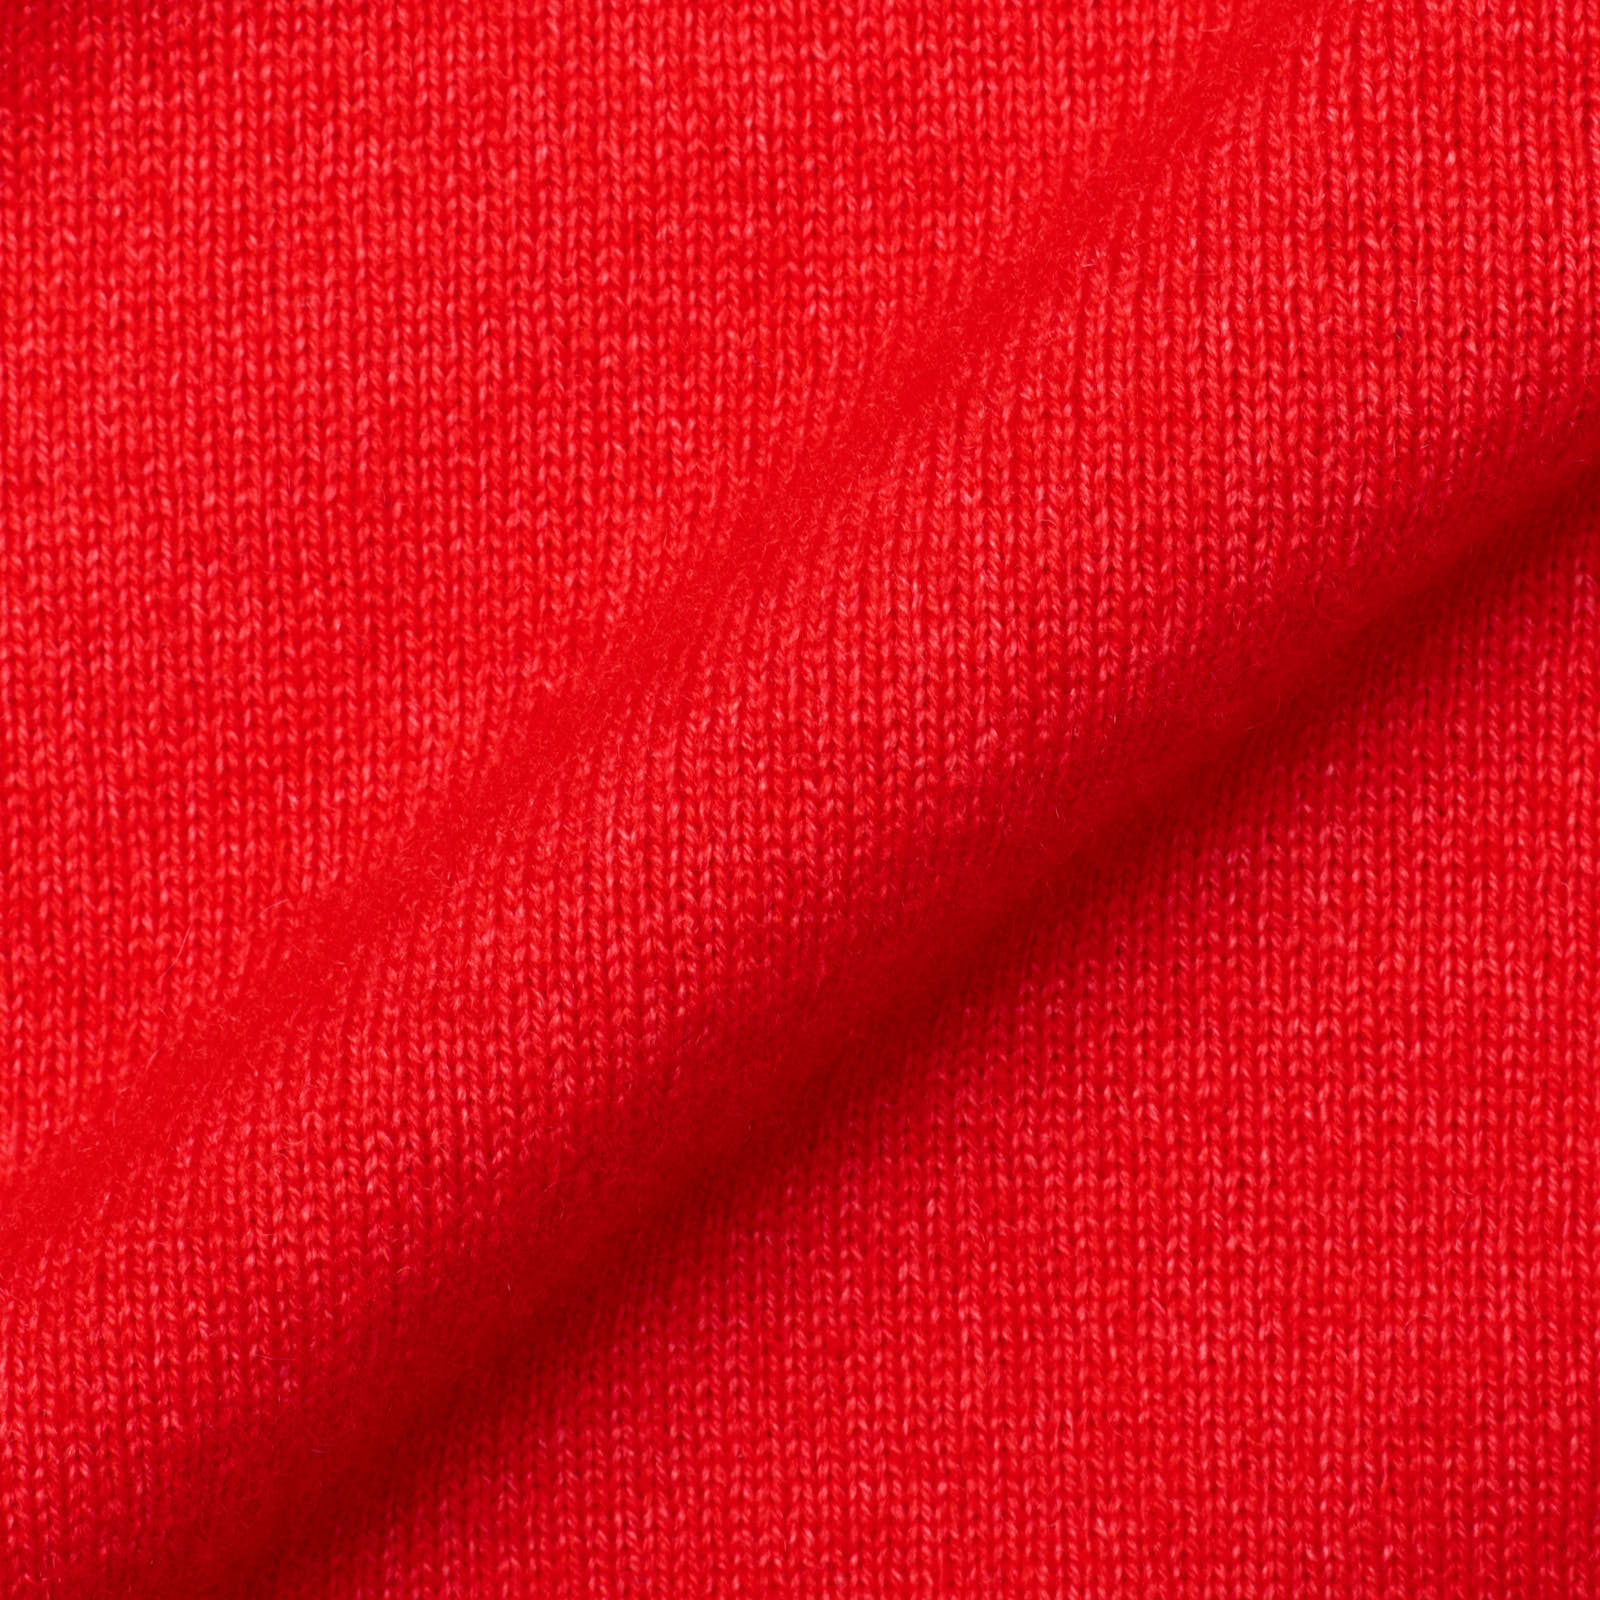 VANNUCCI Milano Red Cashmere Knit Crewneck Sweater EU 50 NEW US M